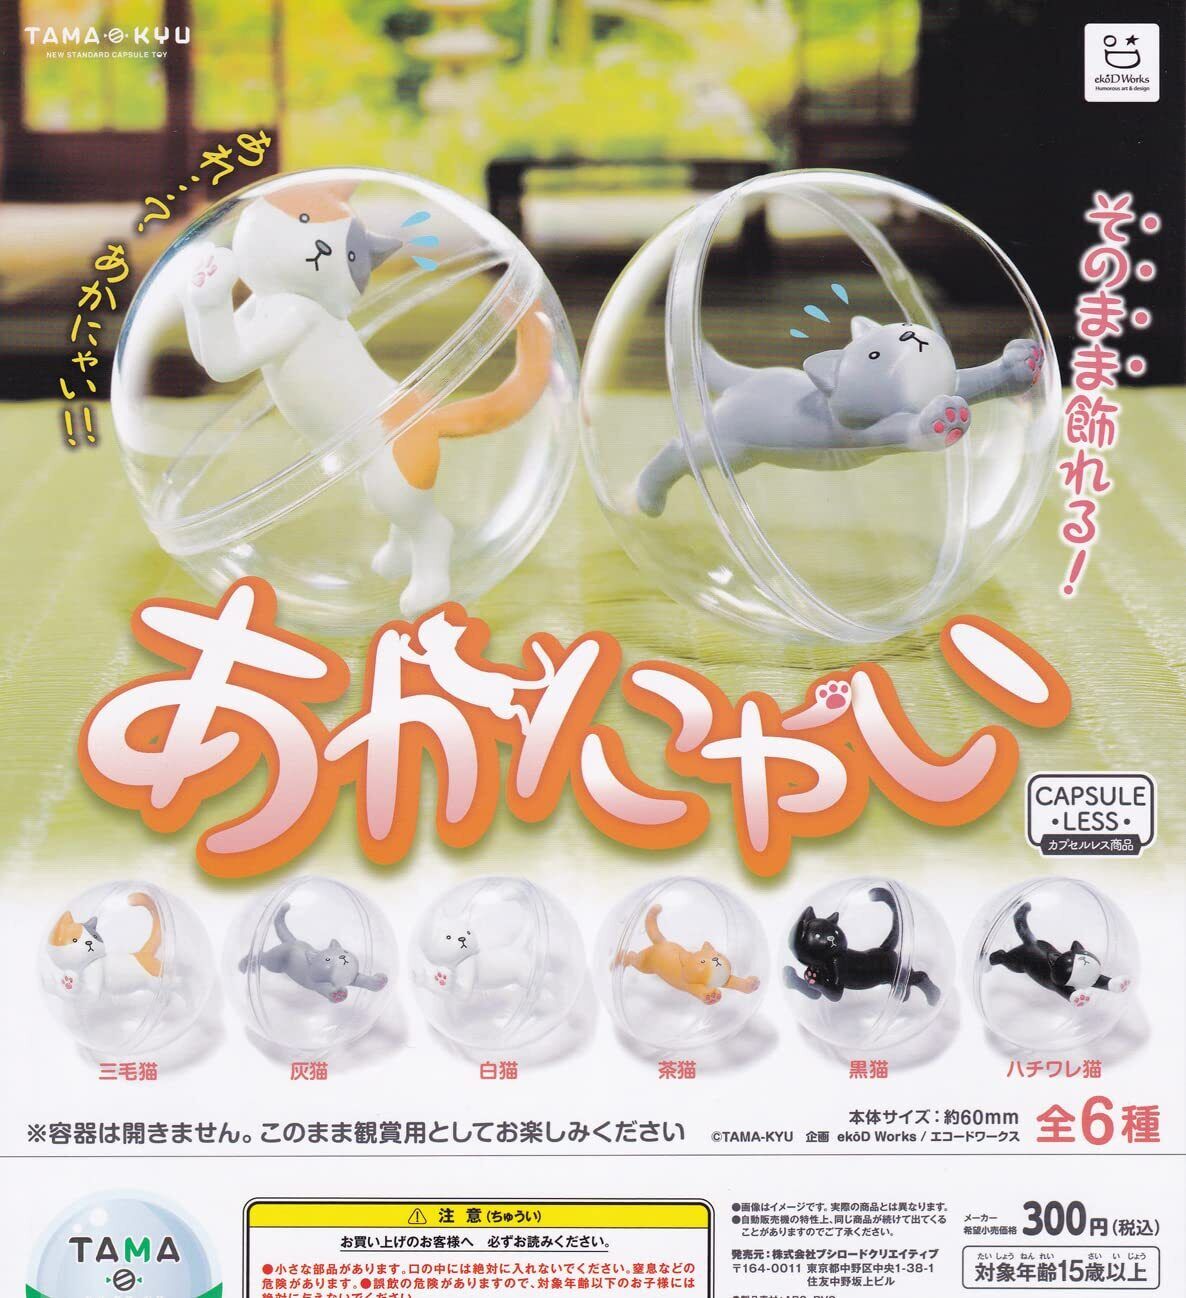 TAMA-KYU Akanyai [Set of 6 types] capsule toy